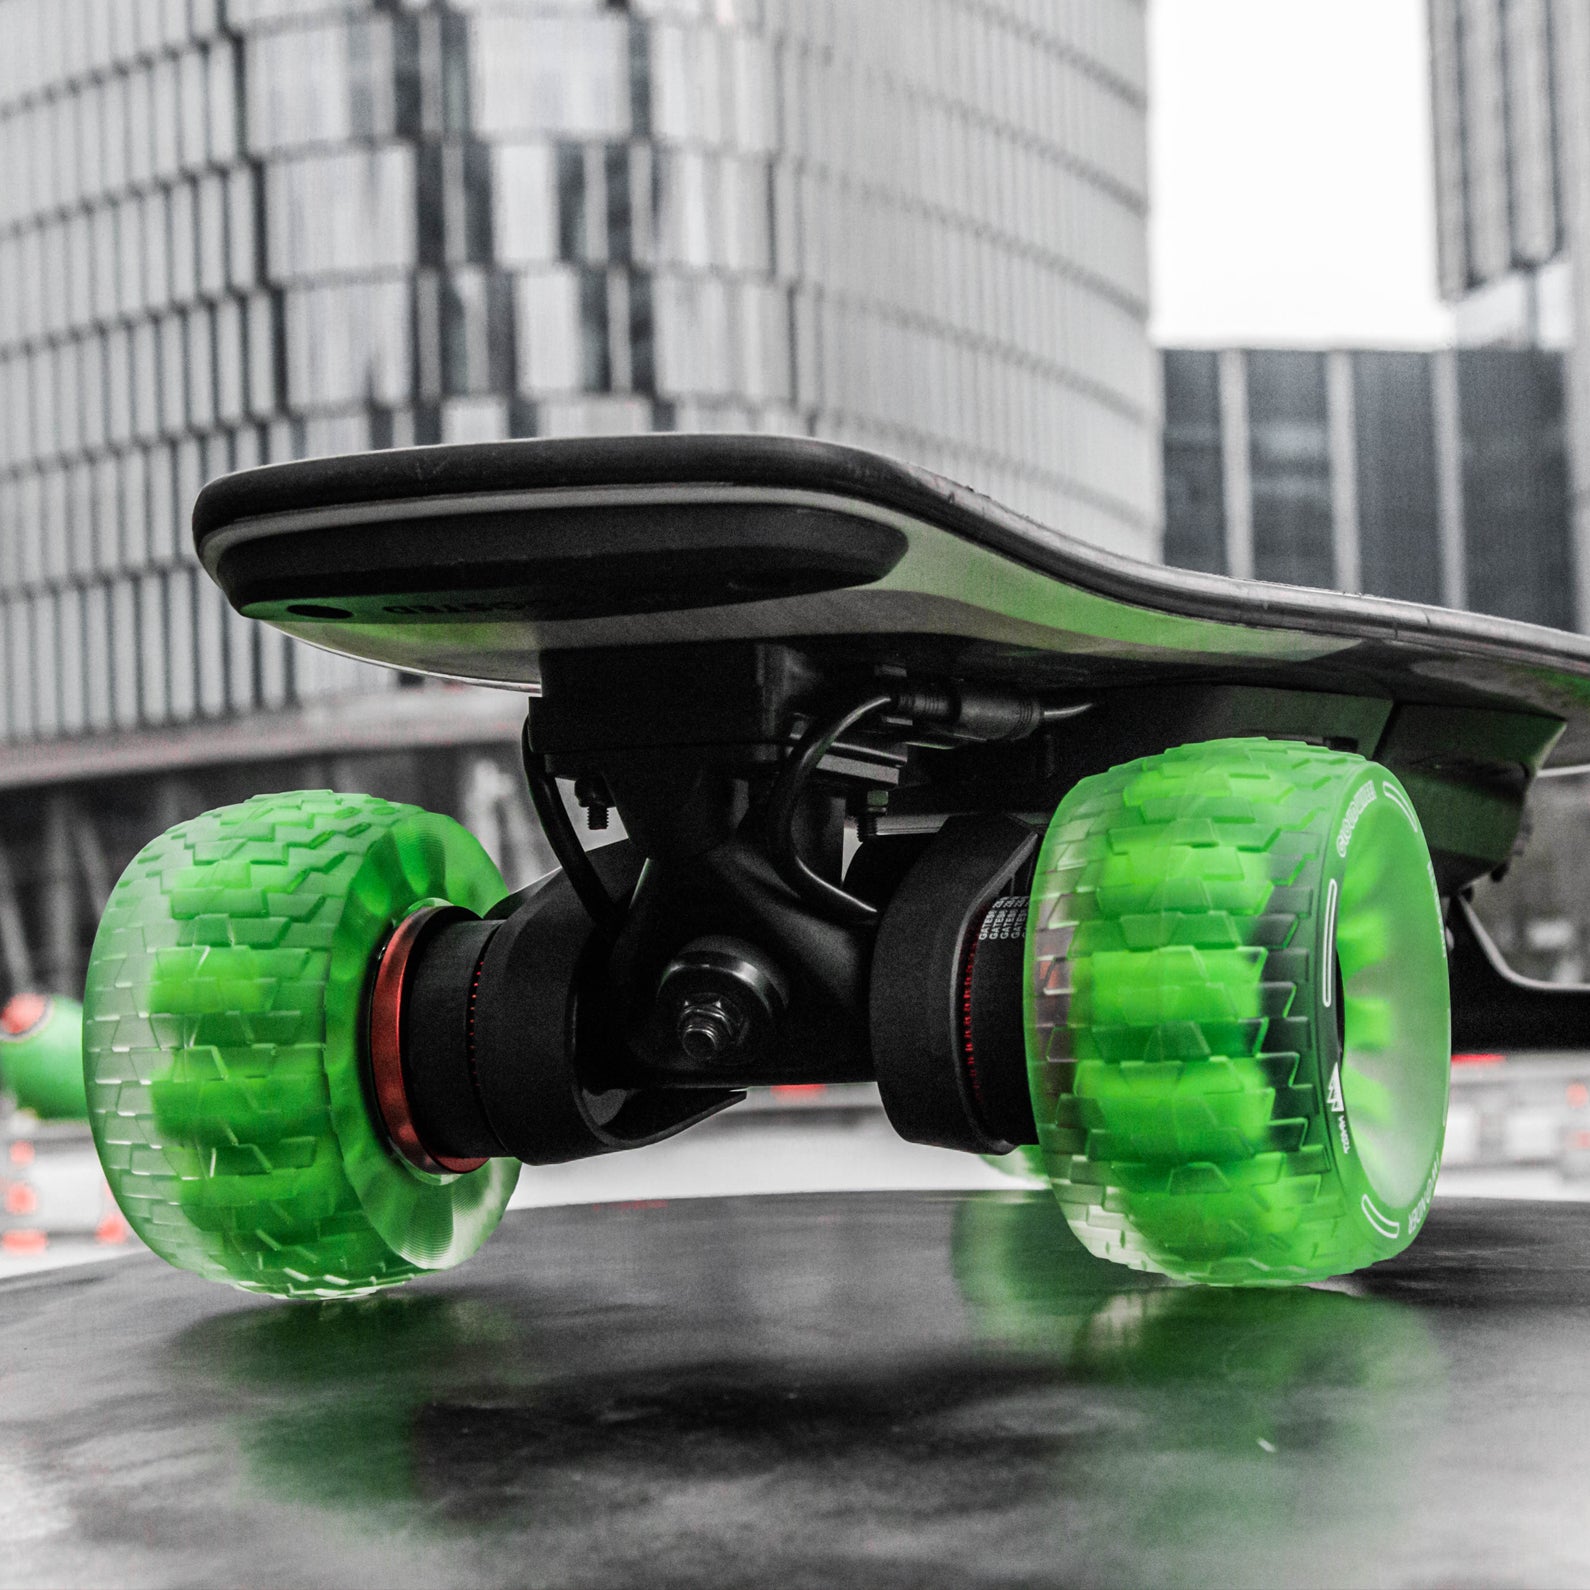 CLOUDWHEEL Discovery 120mm/105mm Urban All Terrain Off Road Electric Skateboard Wheels For Slick Revolution Boards Wheel Pulley Kit